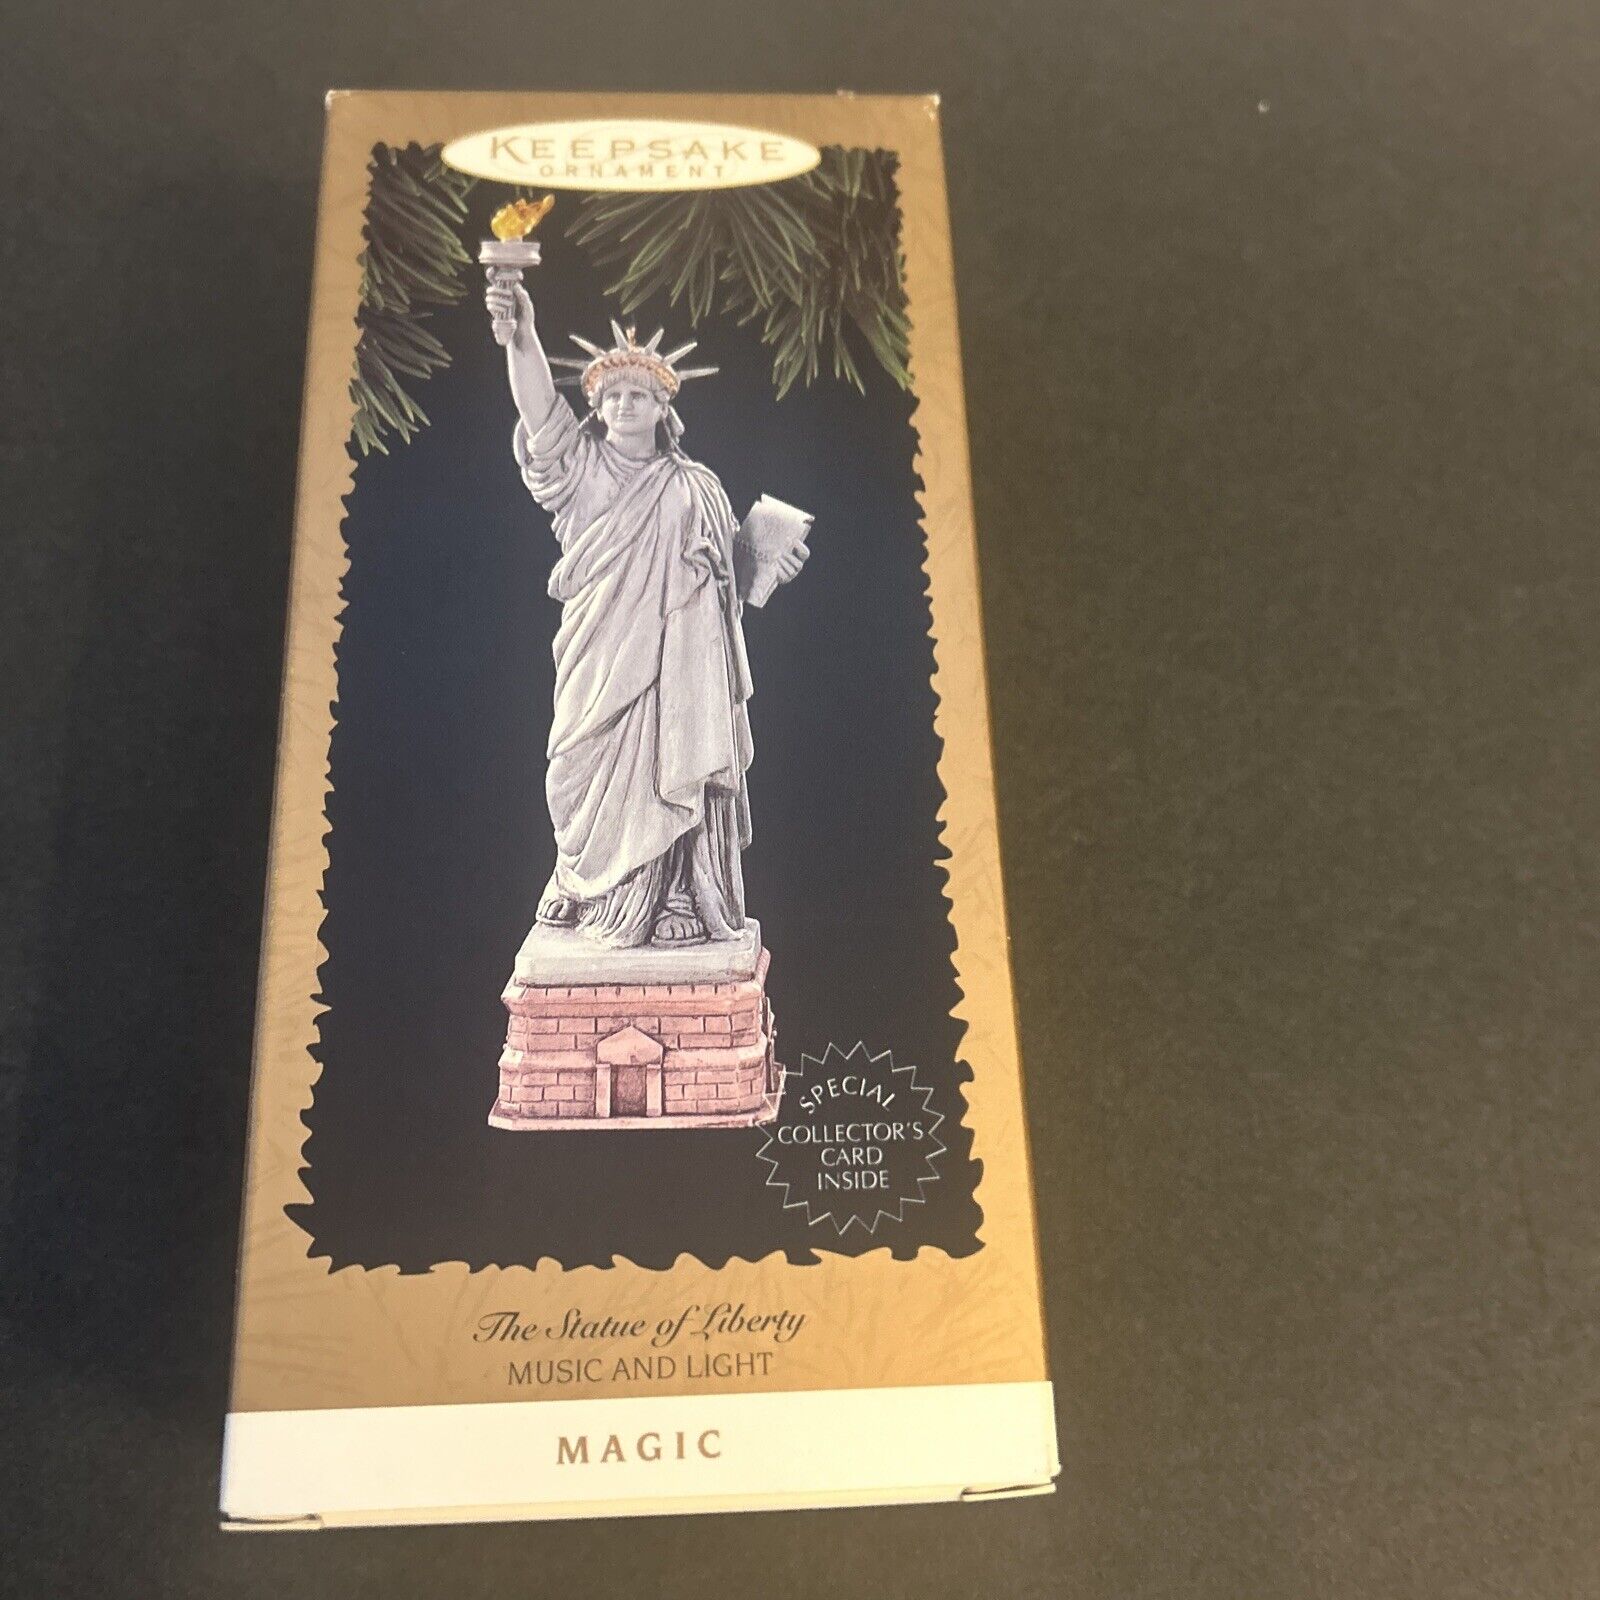 Statue of Liberty 1996 Hallmark Magic Ornament Light Music Star Spangled Banner